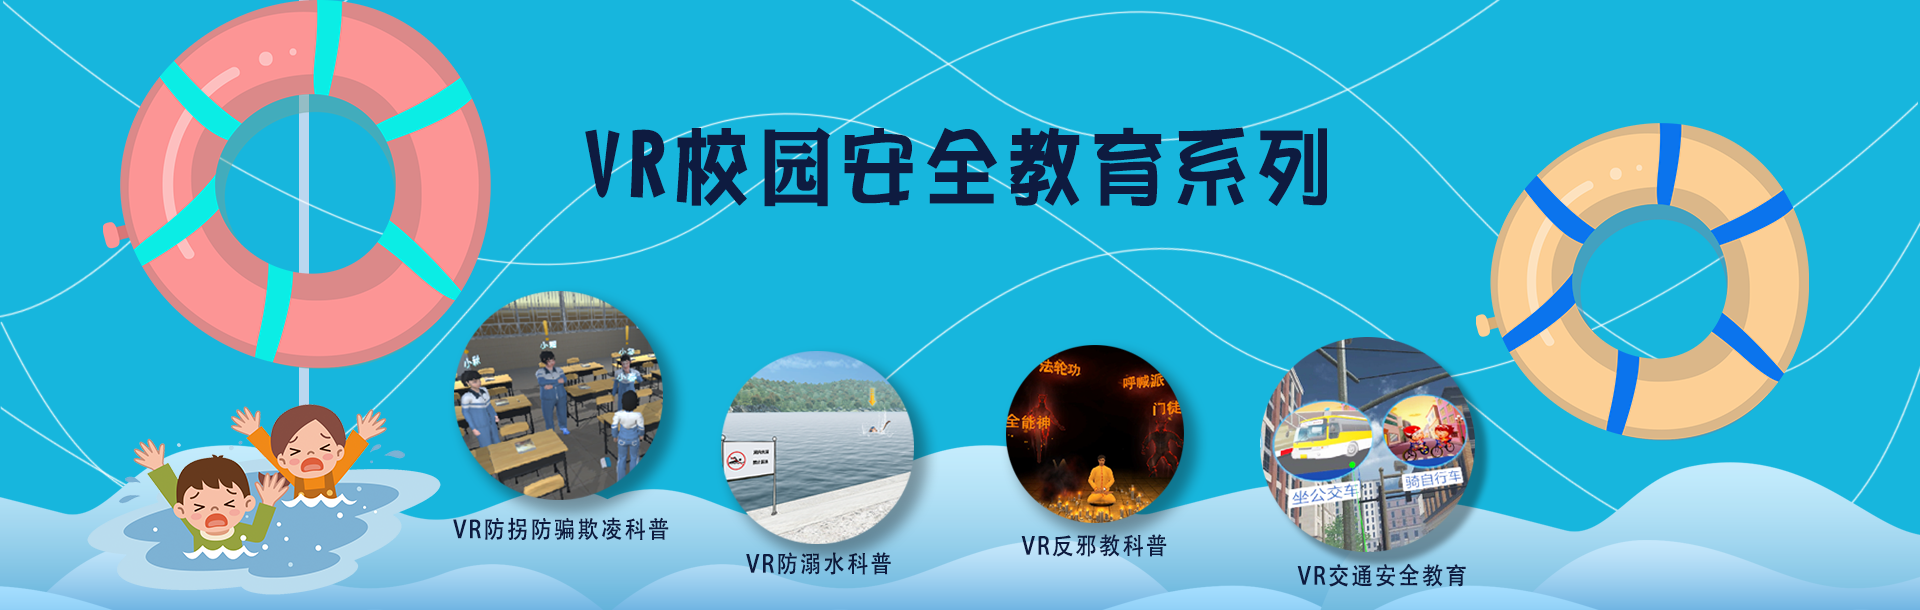 VR全景在线虚拟校园展示教育